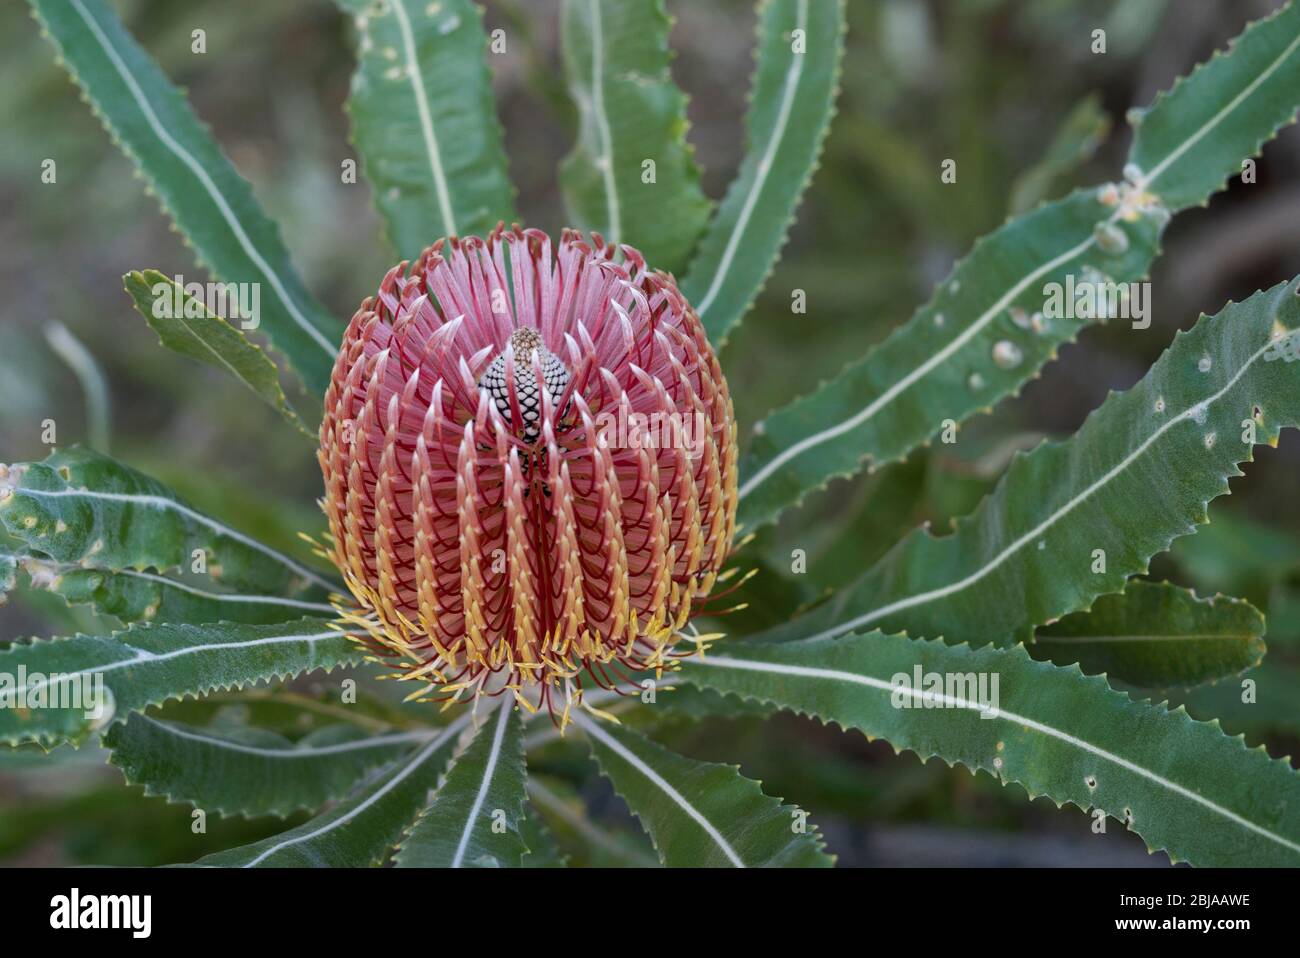 A beautiful Banksia flower native to Western Australia. Stock Photo